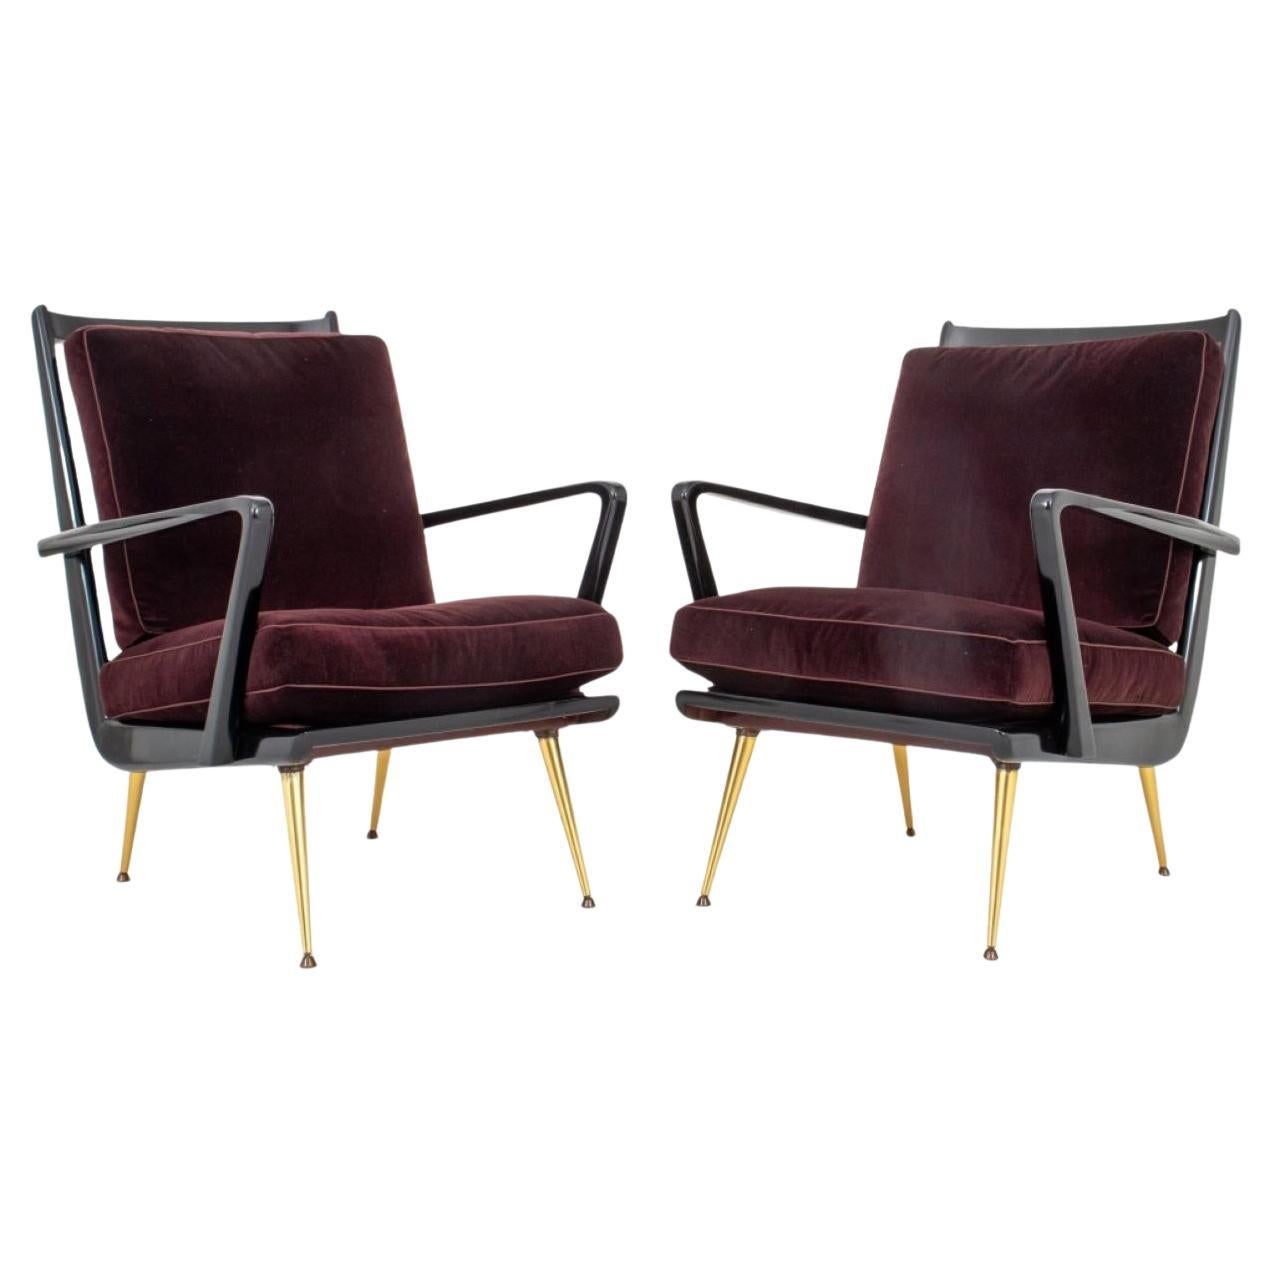 Gio Ponti Style Italian Modernist Armchairs, 2